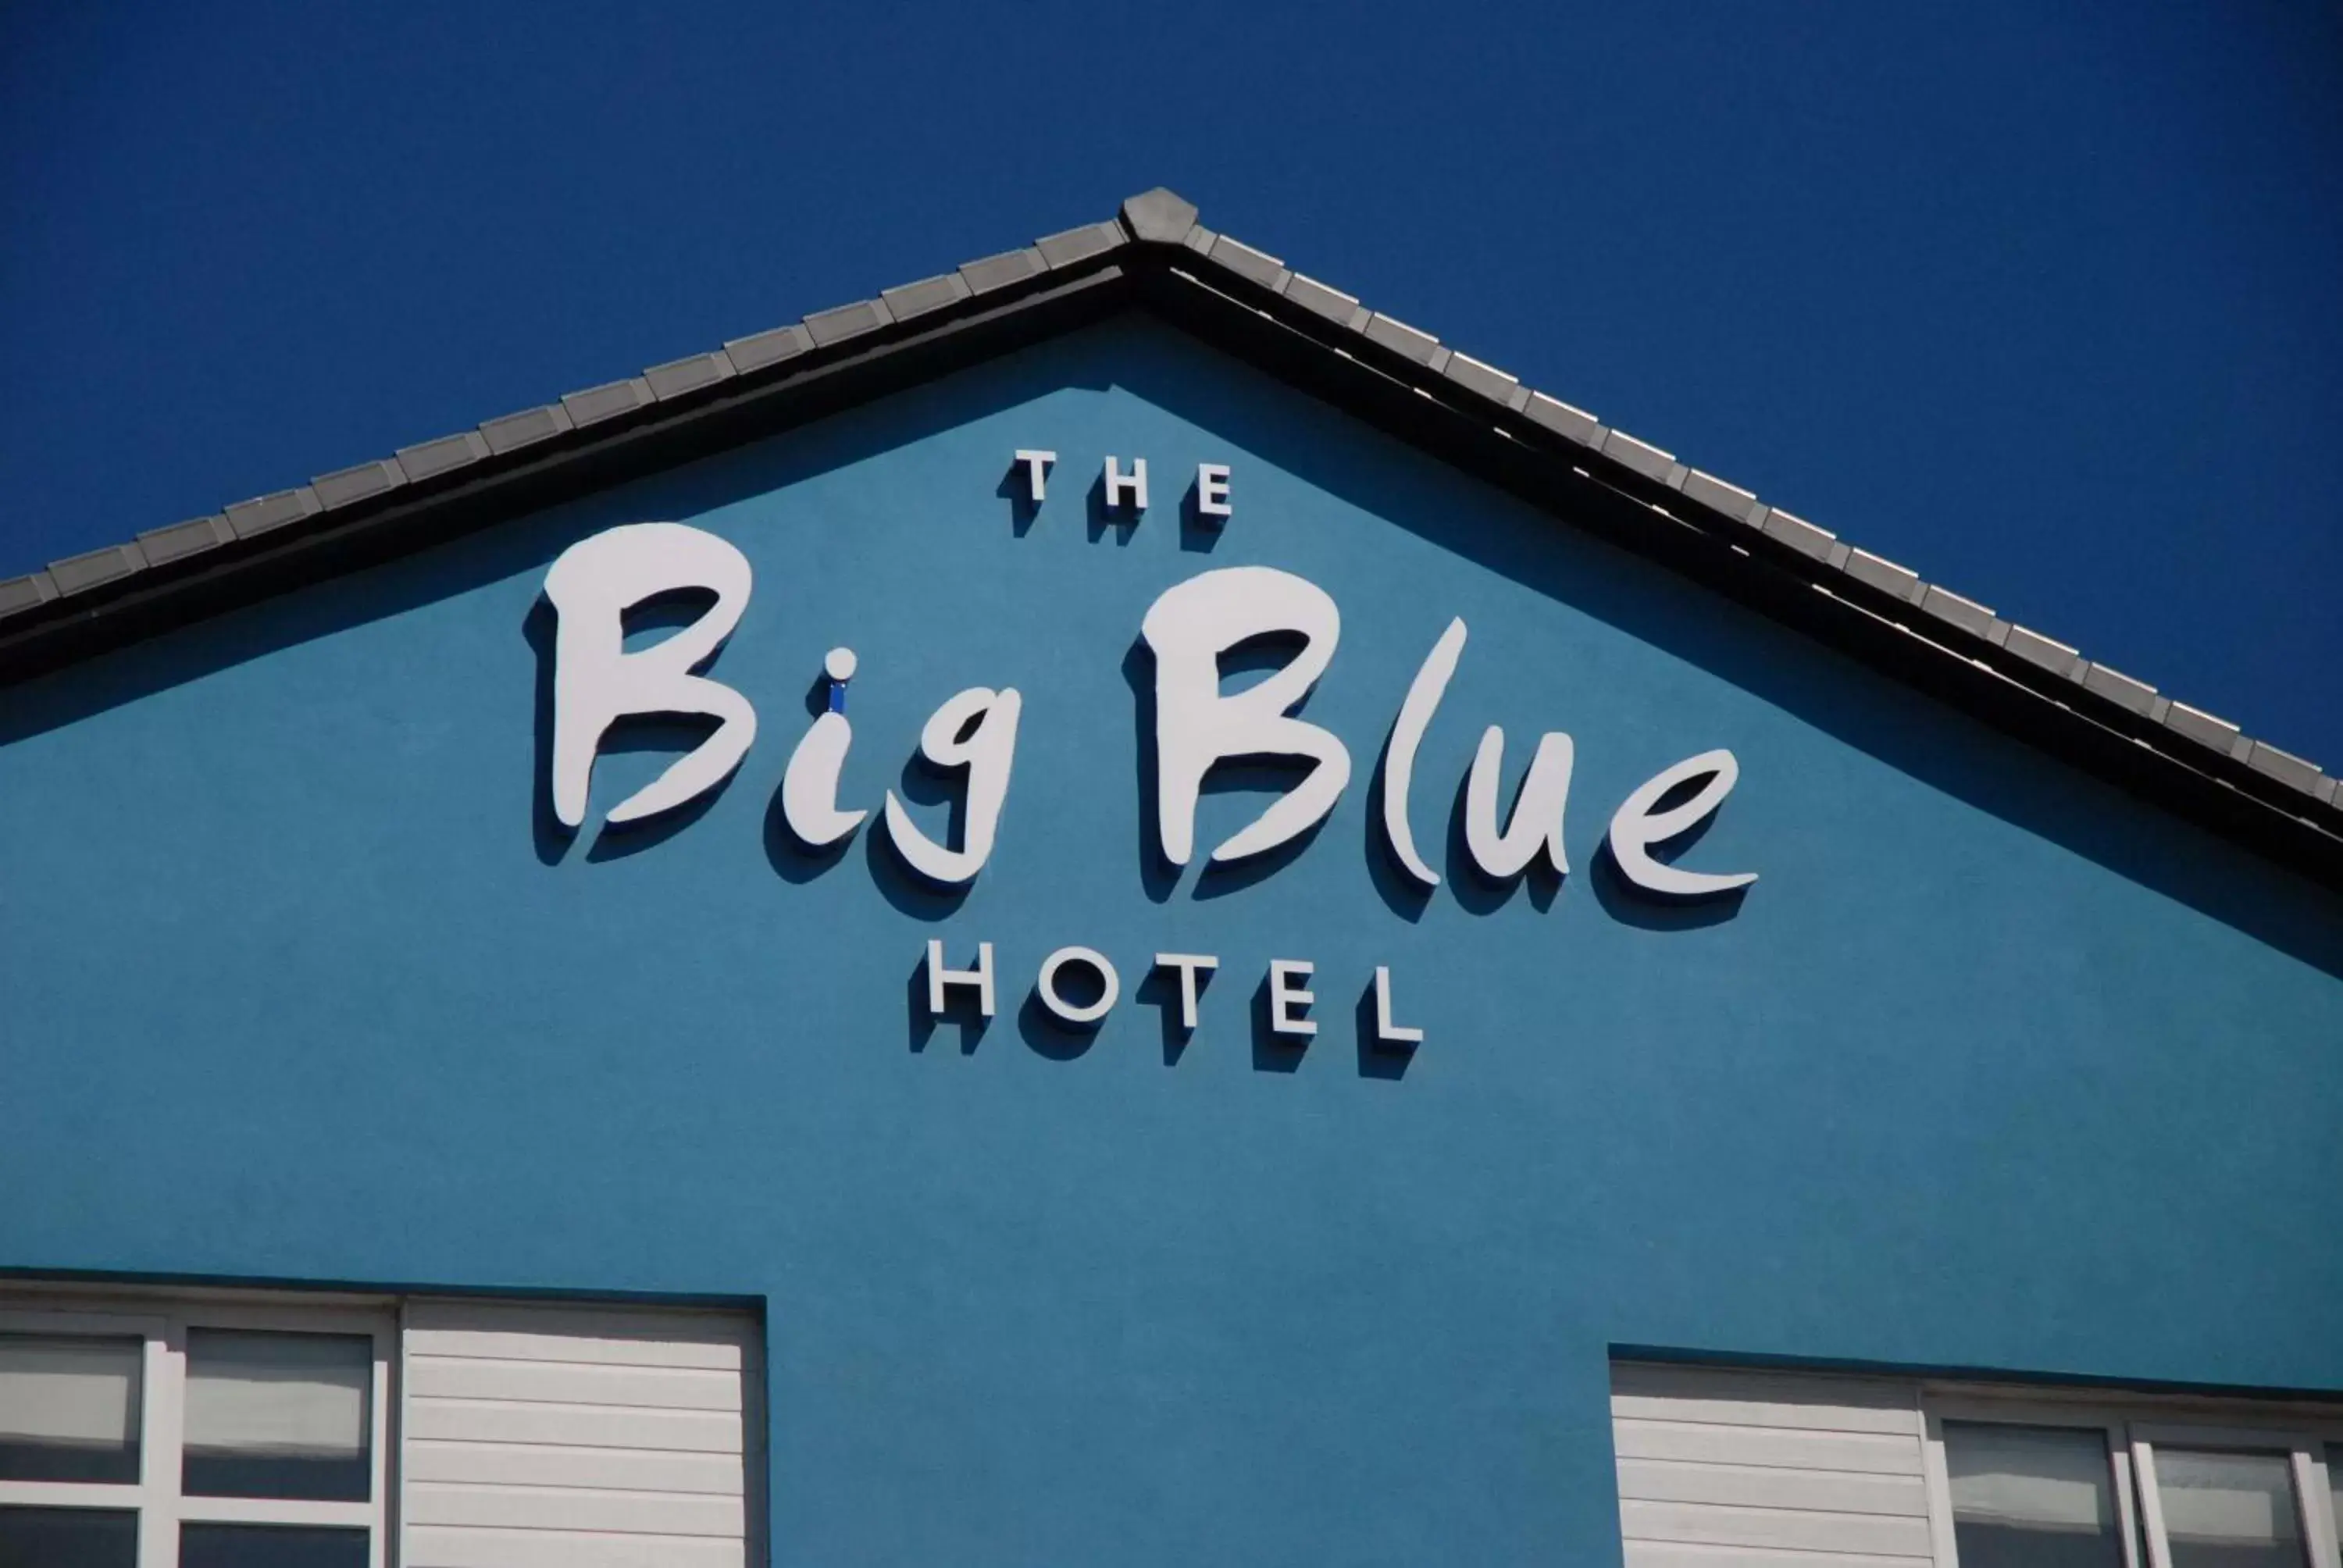 Facade/entrance in The Big Blue Hotel - Blackpool Pleasure Beach